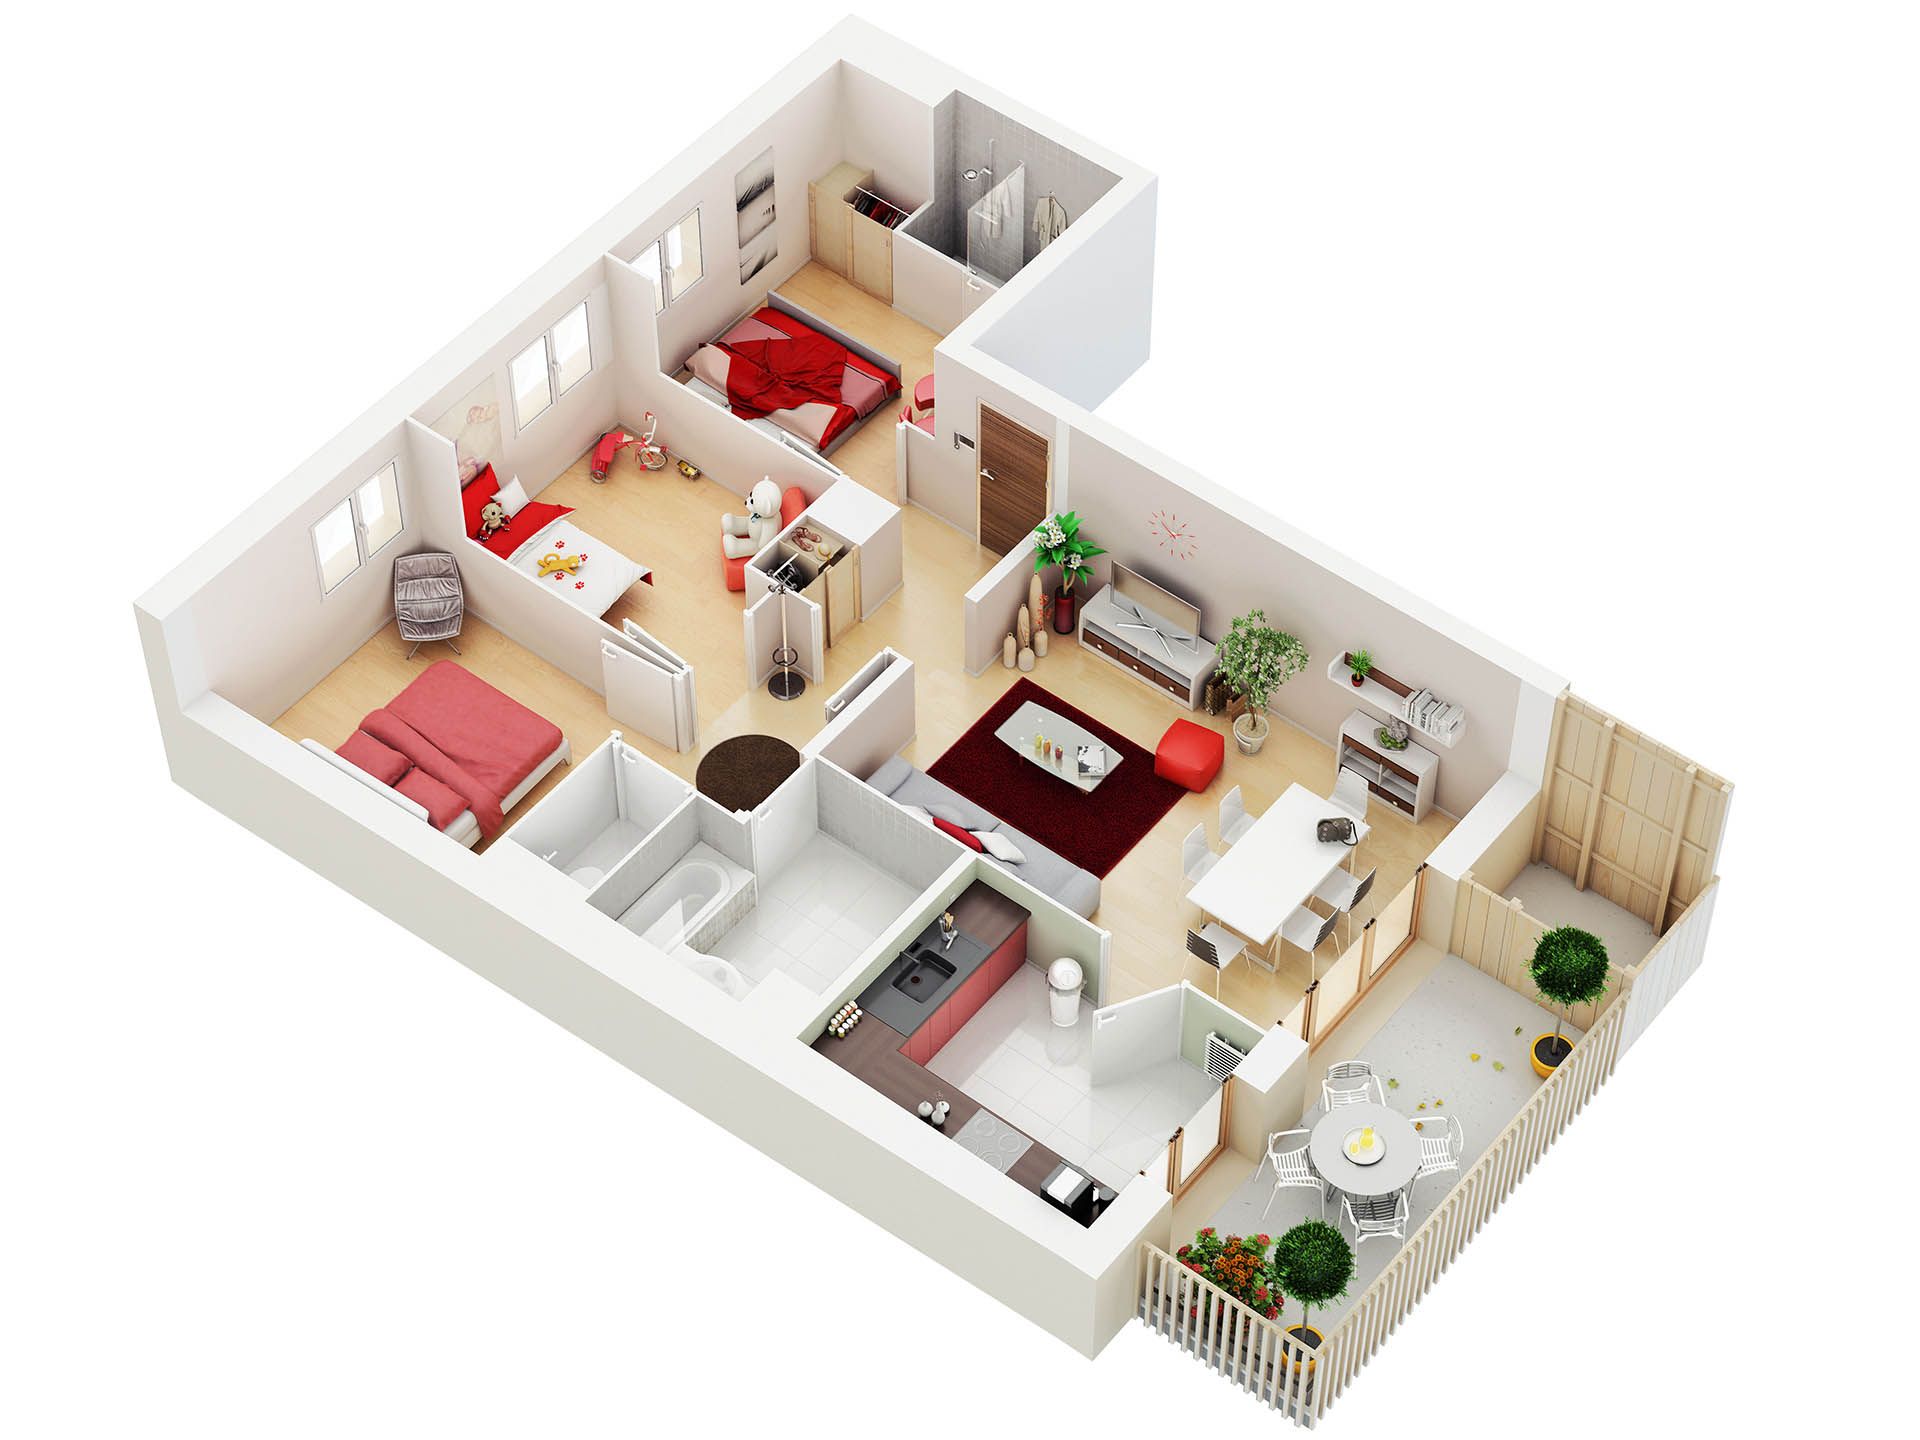 Дом plans. План квартиры. Планировка четырехкомнатной квартиры. Модель квартиры. 3d планировка.